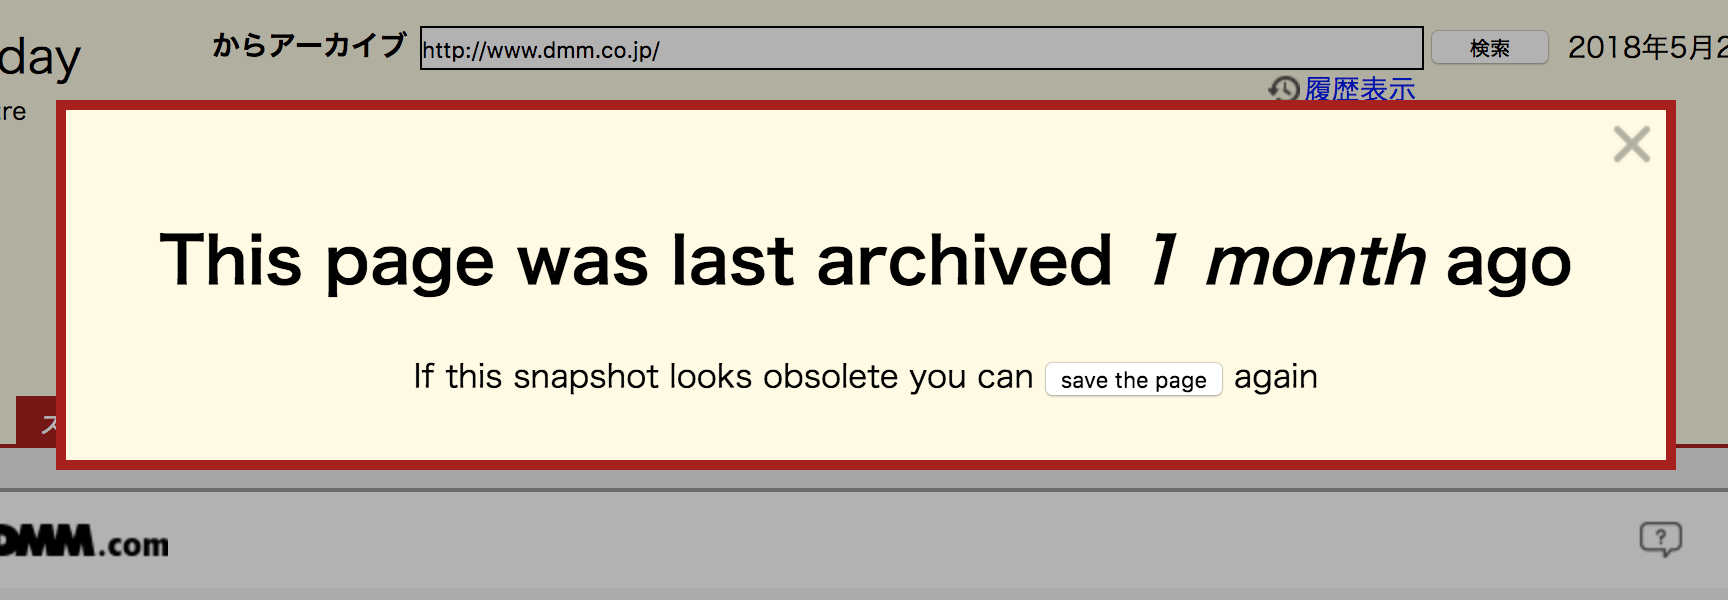 「This page was last archived 〇 ago」と表示されたら、古いページを表示しているため、「save the page」ボタンを押して最新のWebページを取得